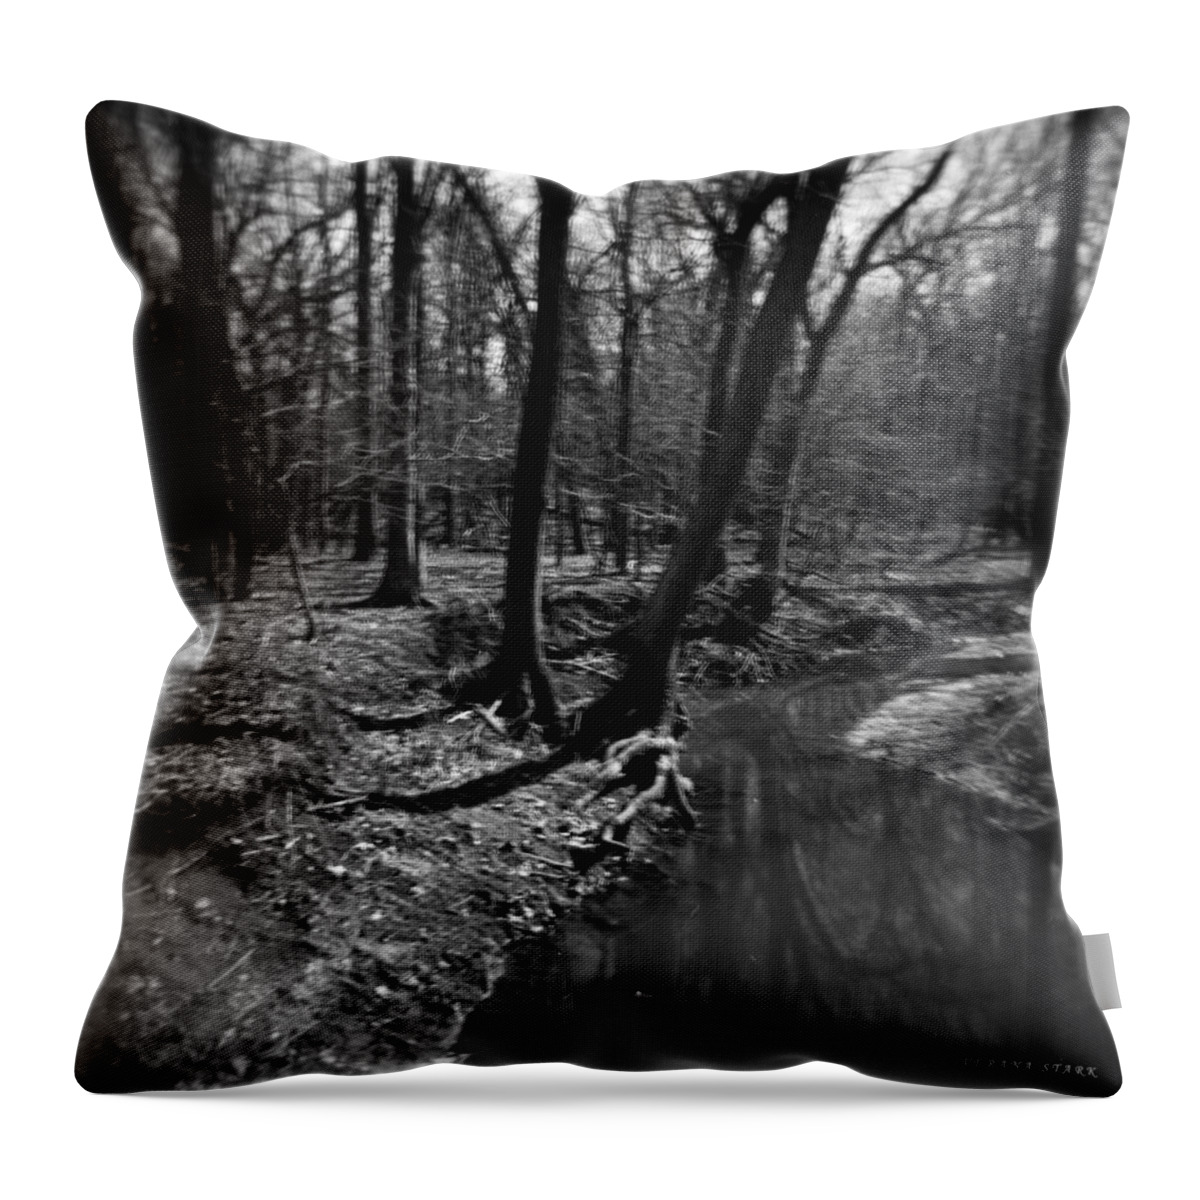 Thorn Creek Throw Pillow featuring the photograph Thorn Creek #1 by Verana Stark